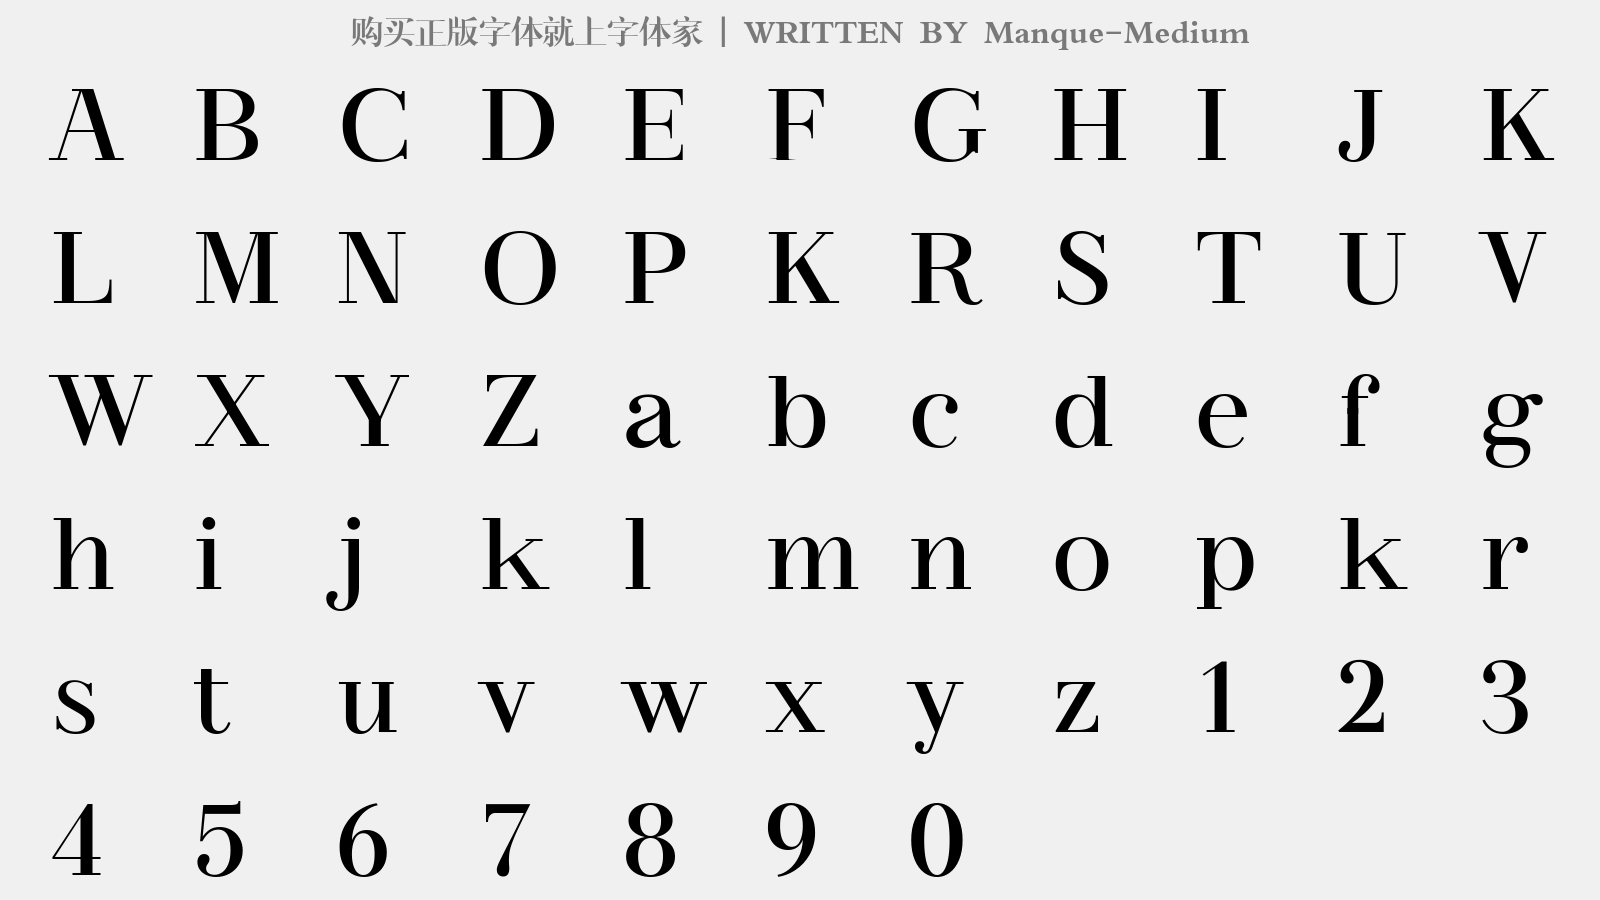 Manque-Medium - 大写字母/小写字母/数字